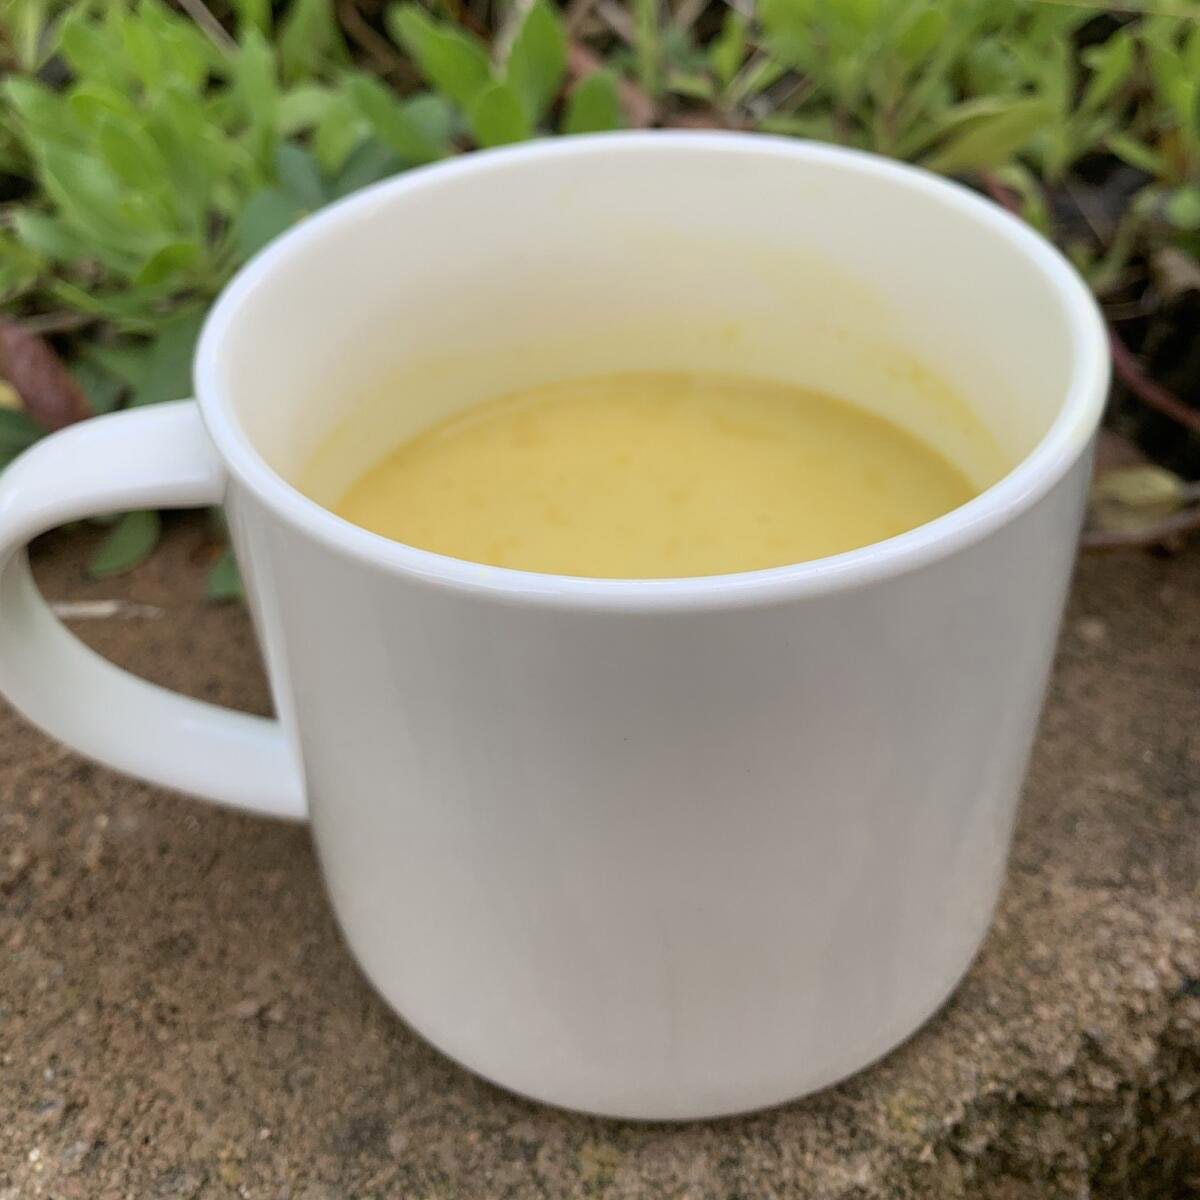 Golden Milk Latte-What's the Health Benefit?